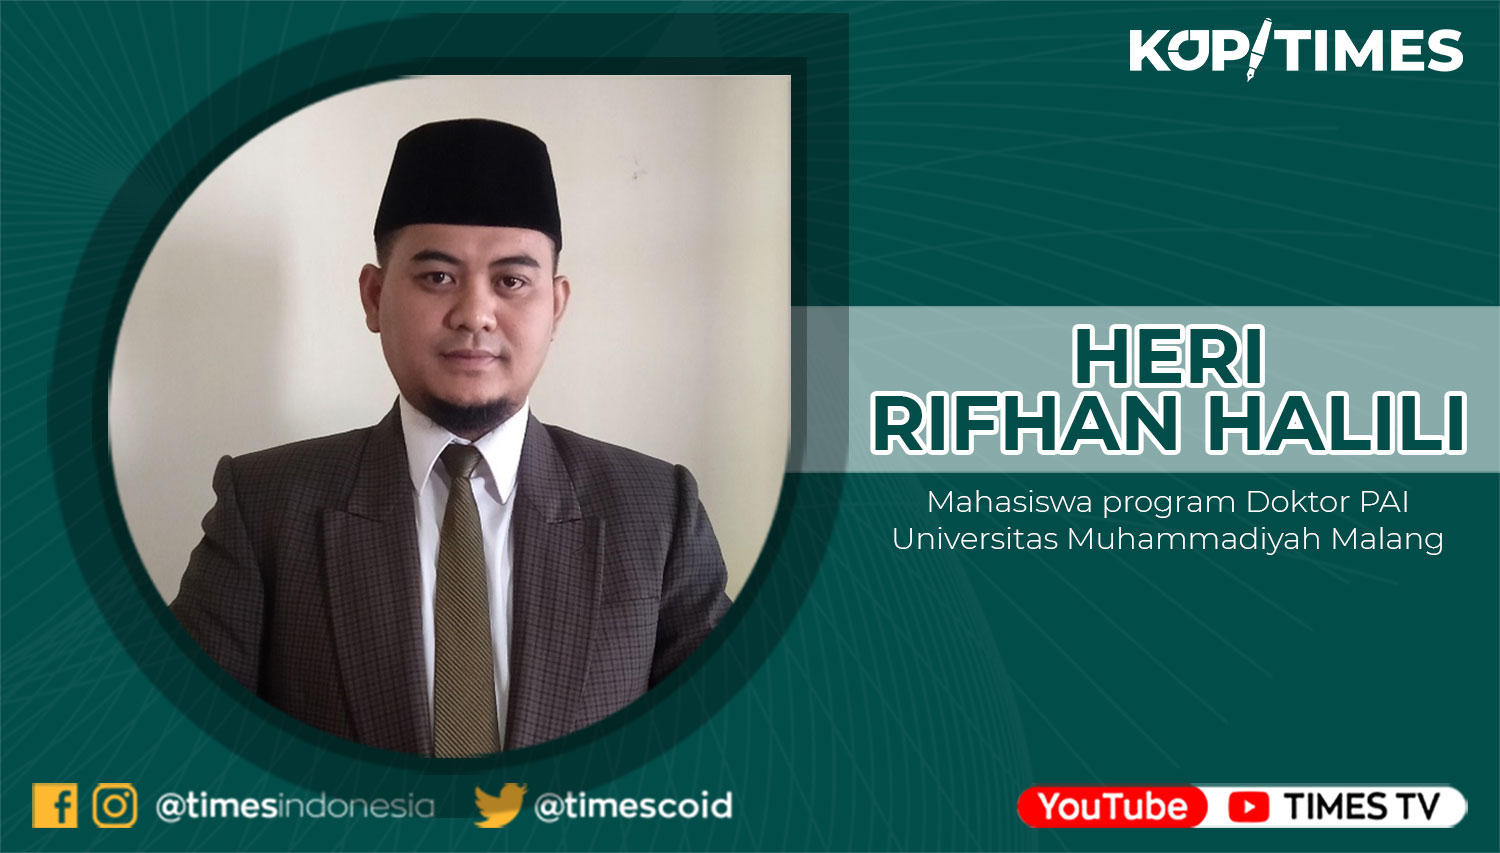 Heri Rifhan Halili, Mahasiswa program Doktor PAI Universitas Muhammadiyah Malang.